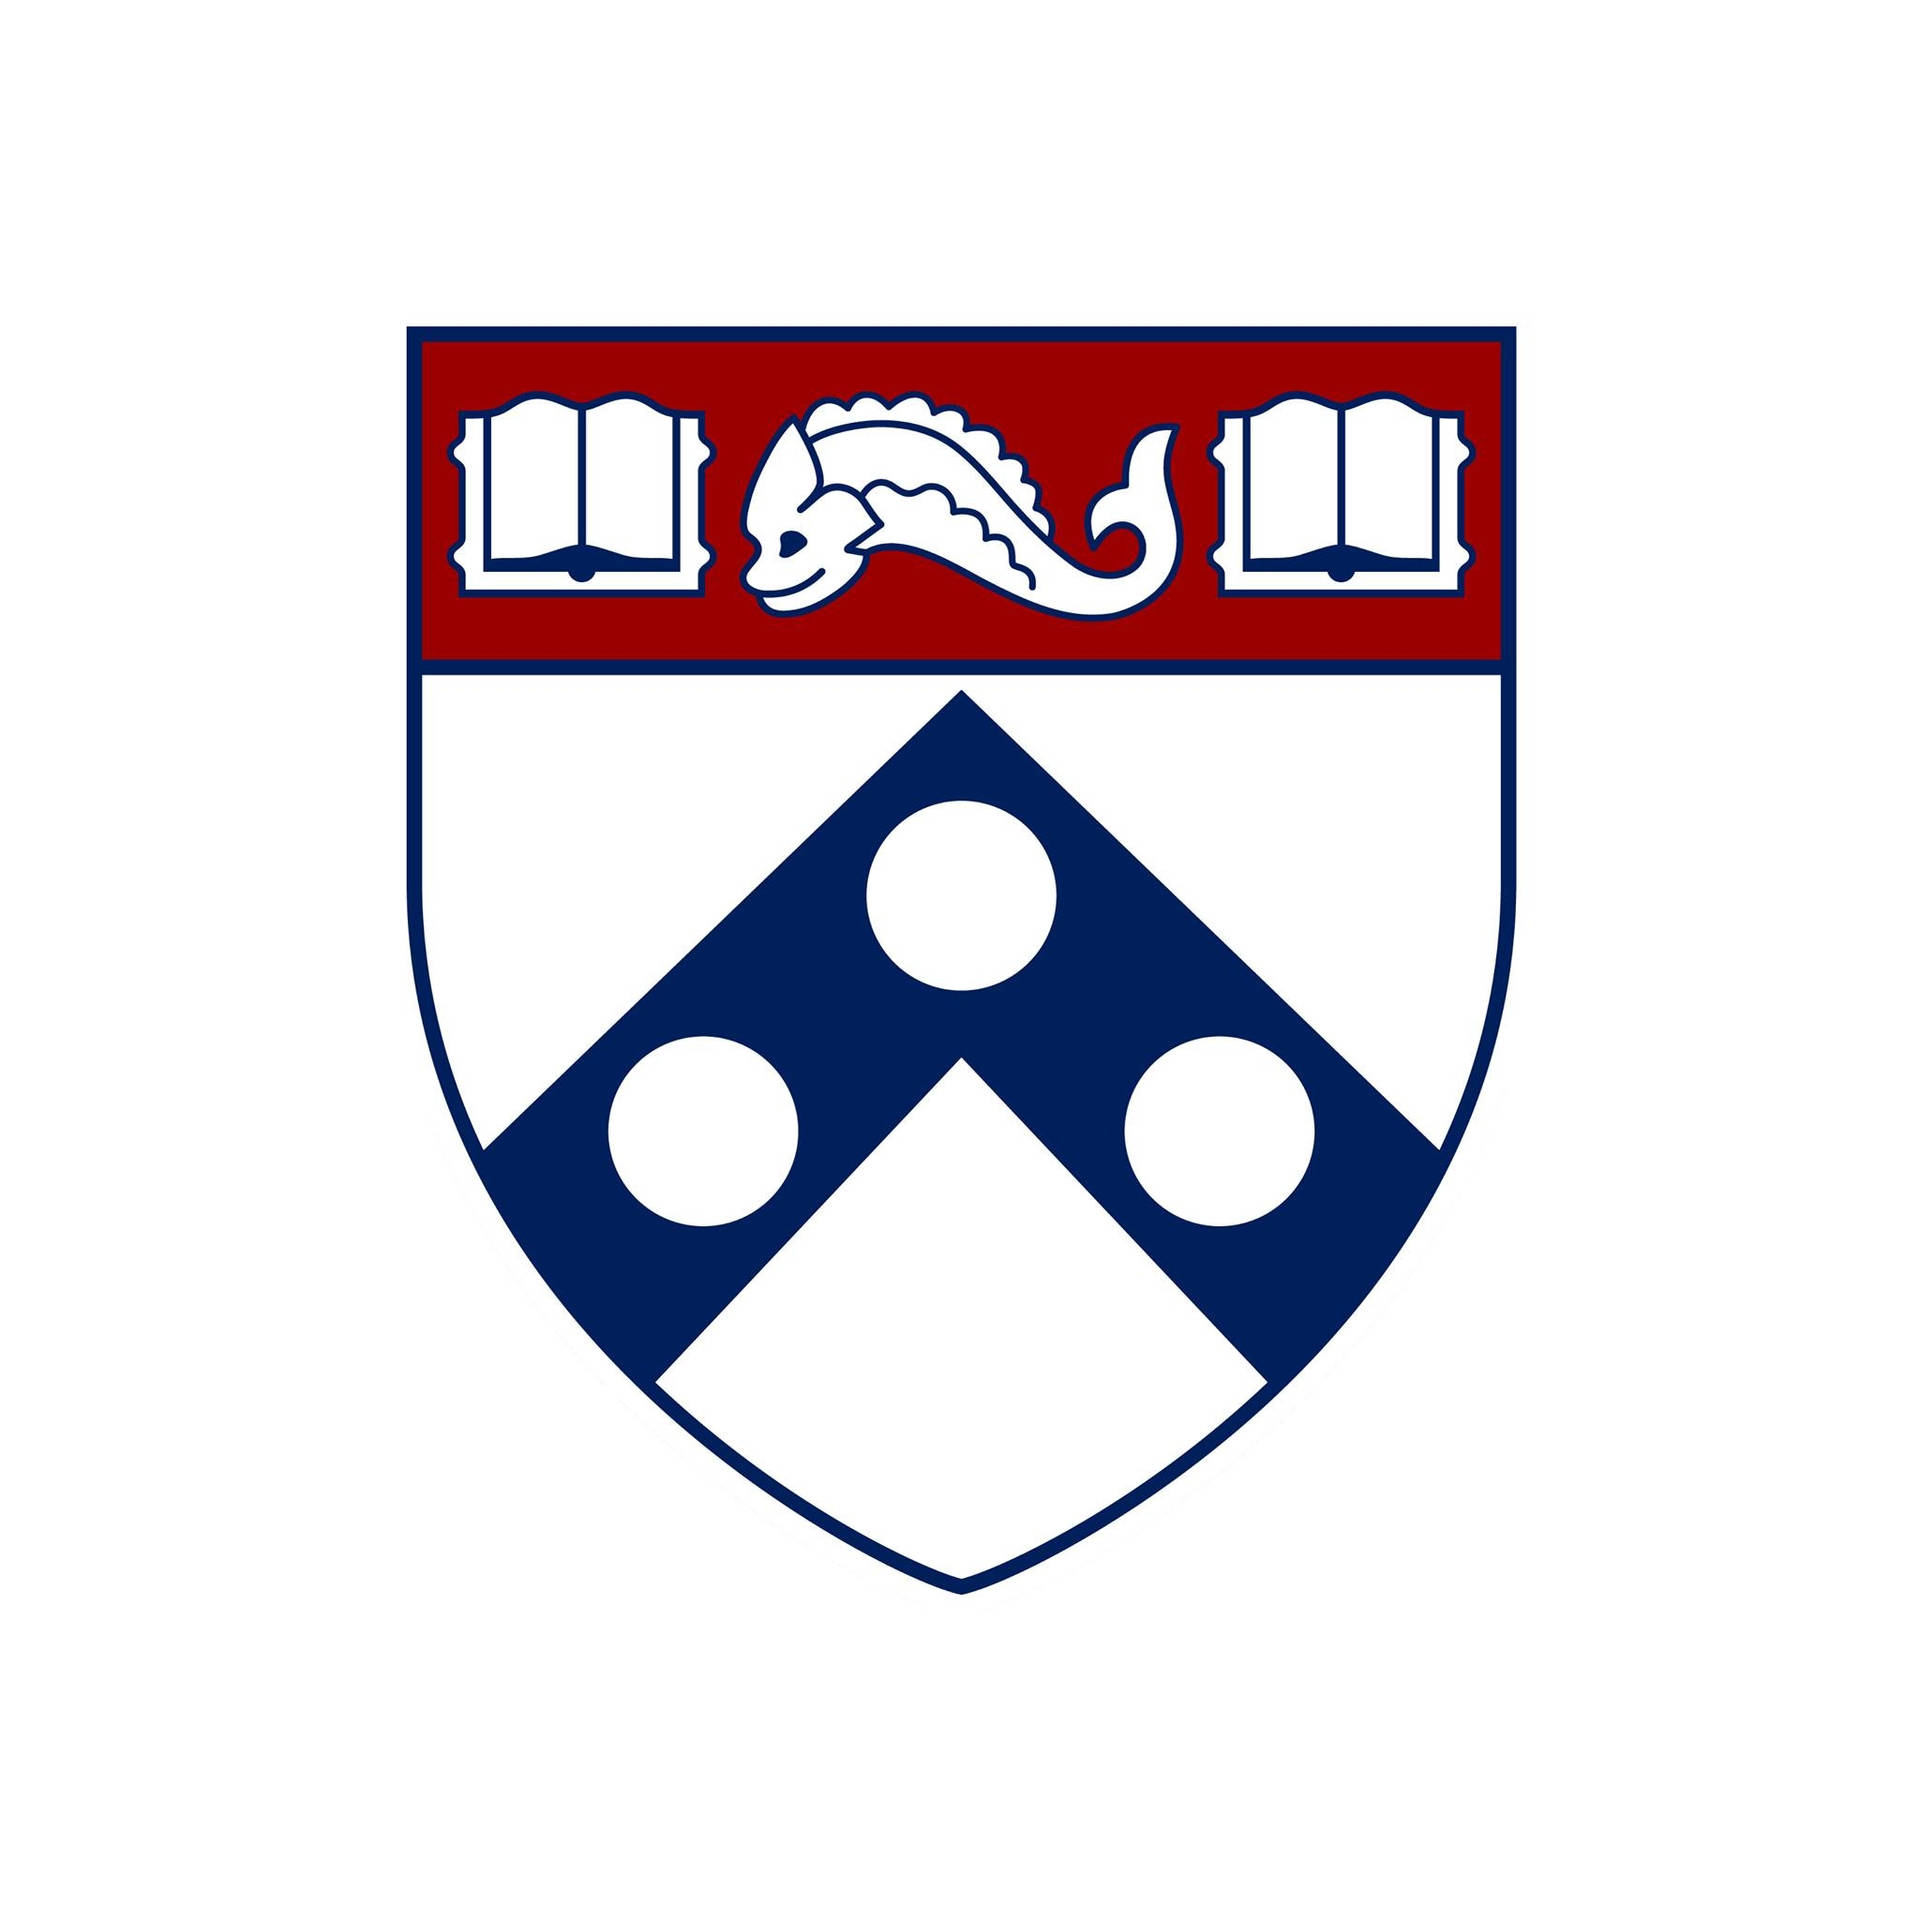 Emblem of the University of Pennsylvania Wallpaper